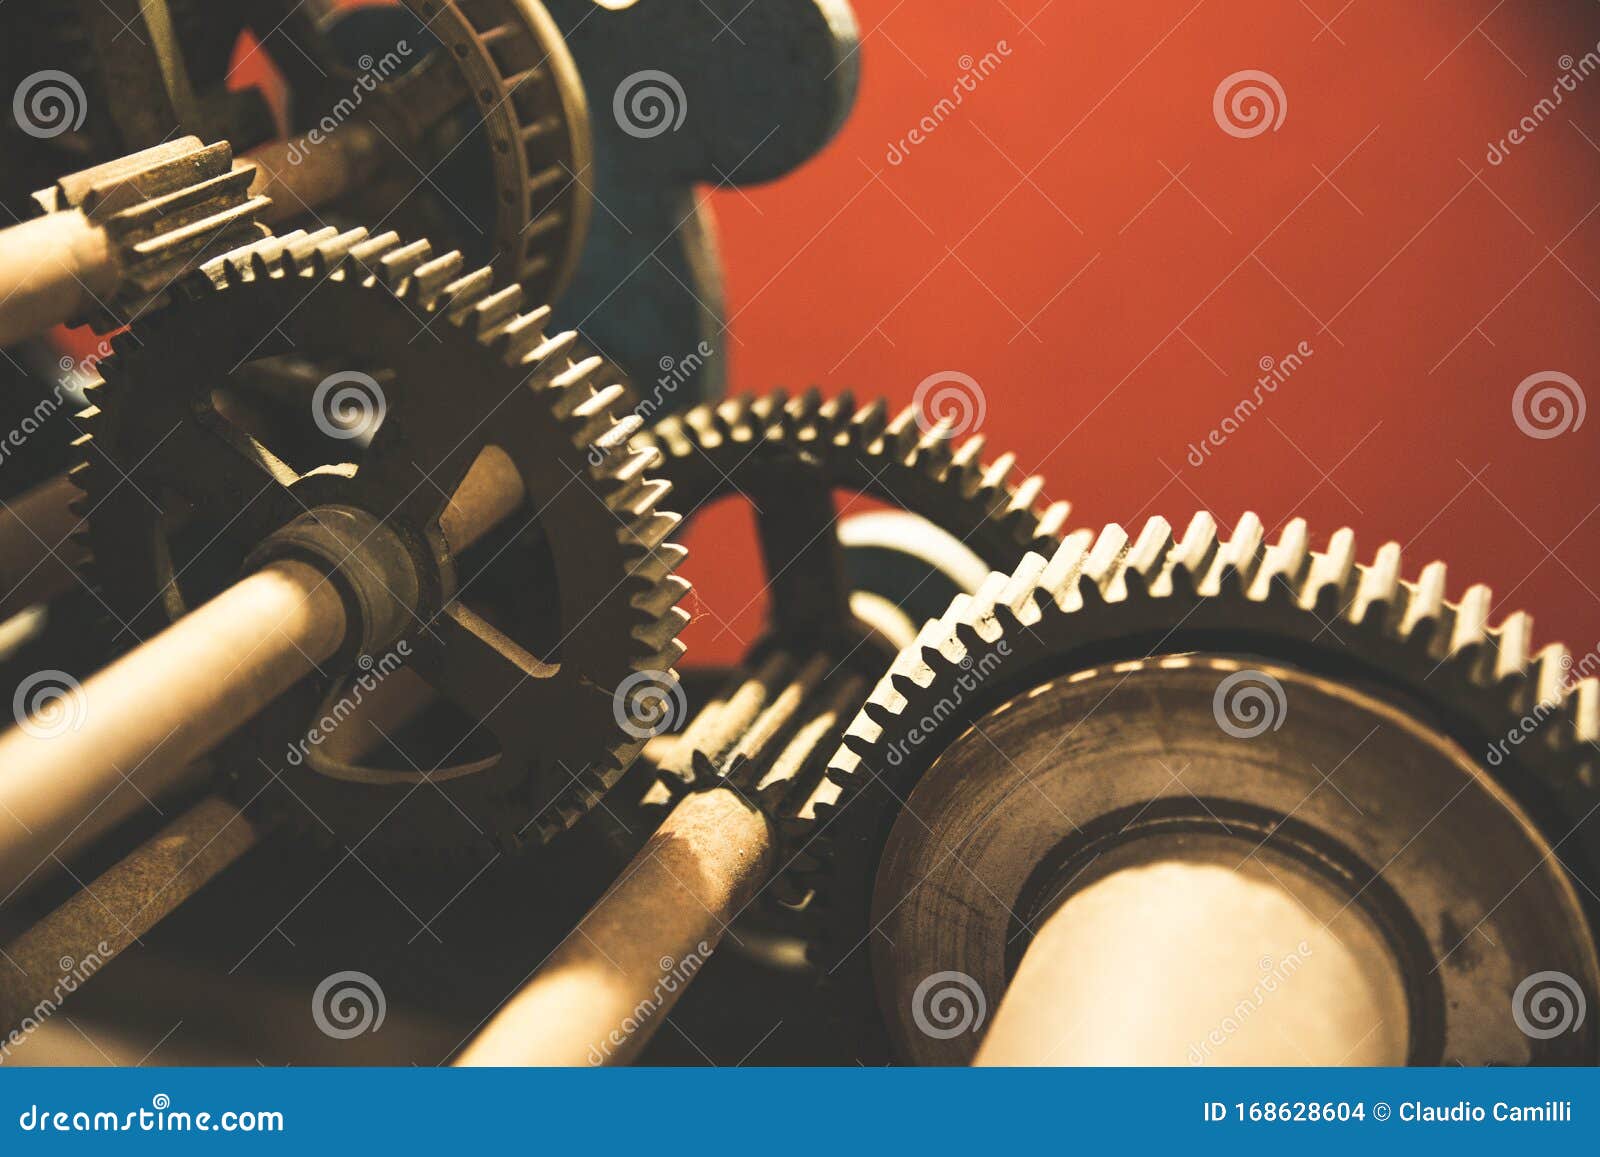 old mechanical analogic iron gears